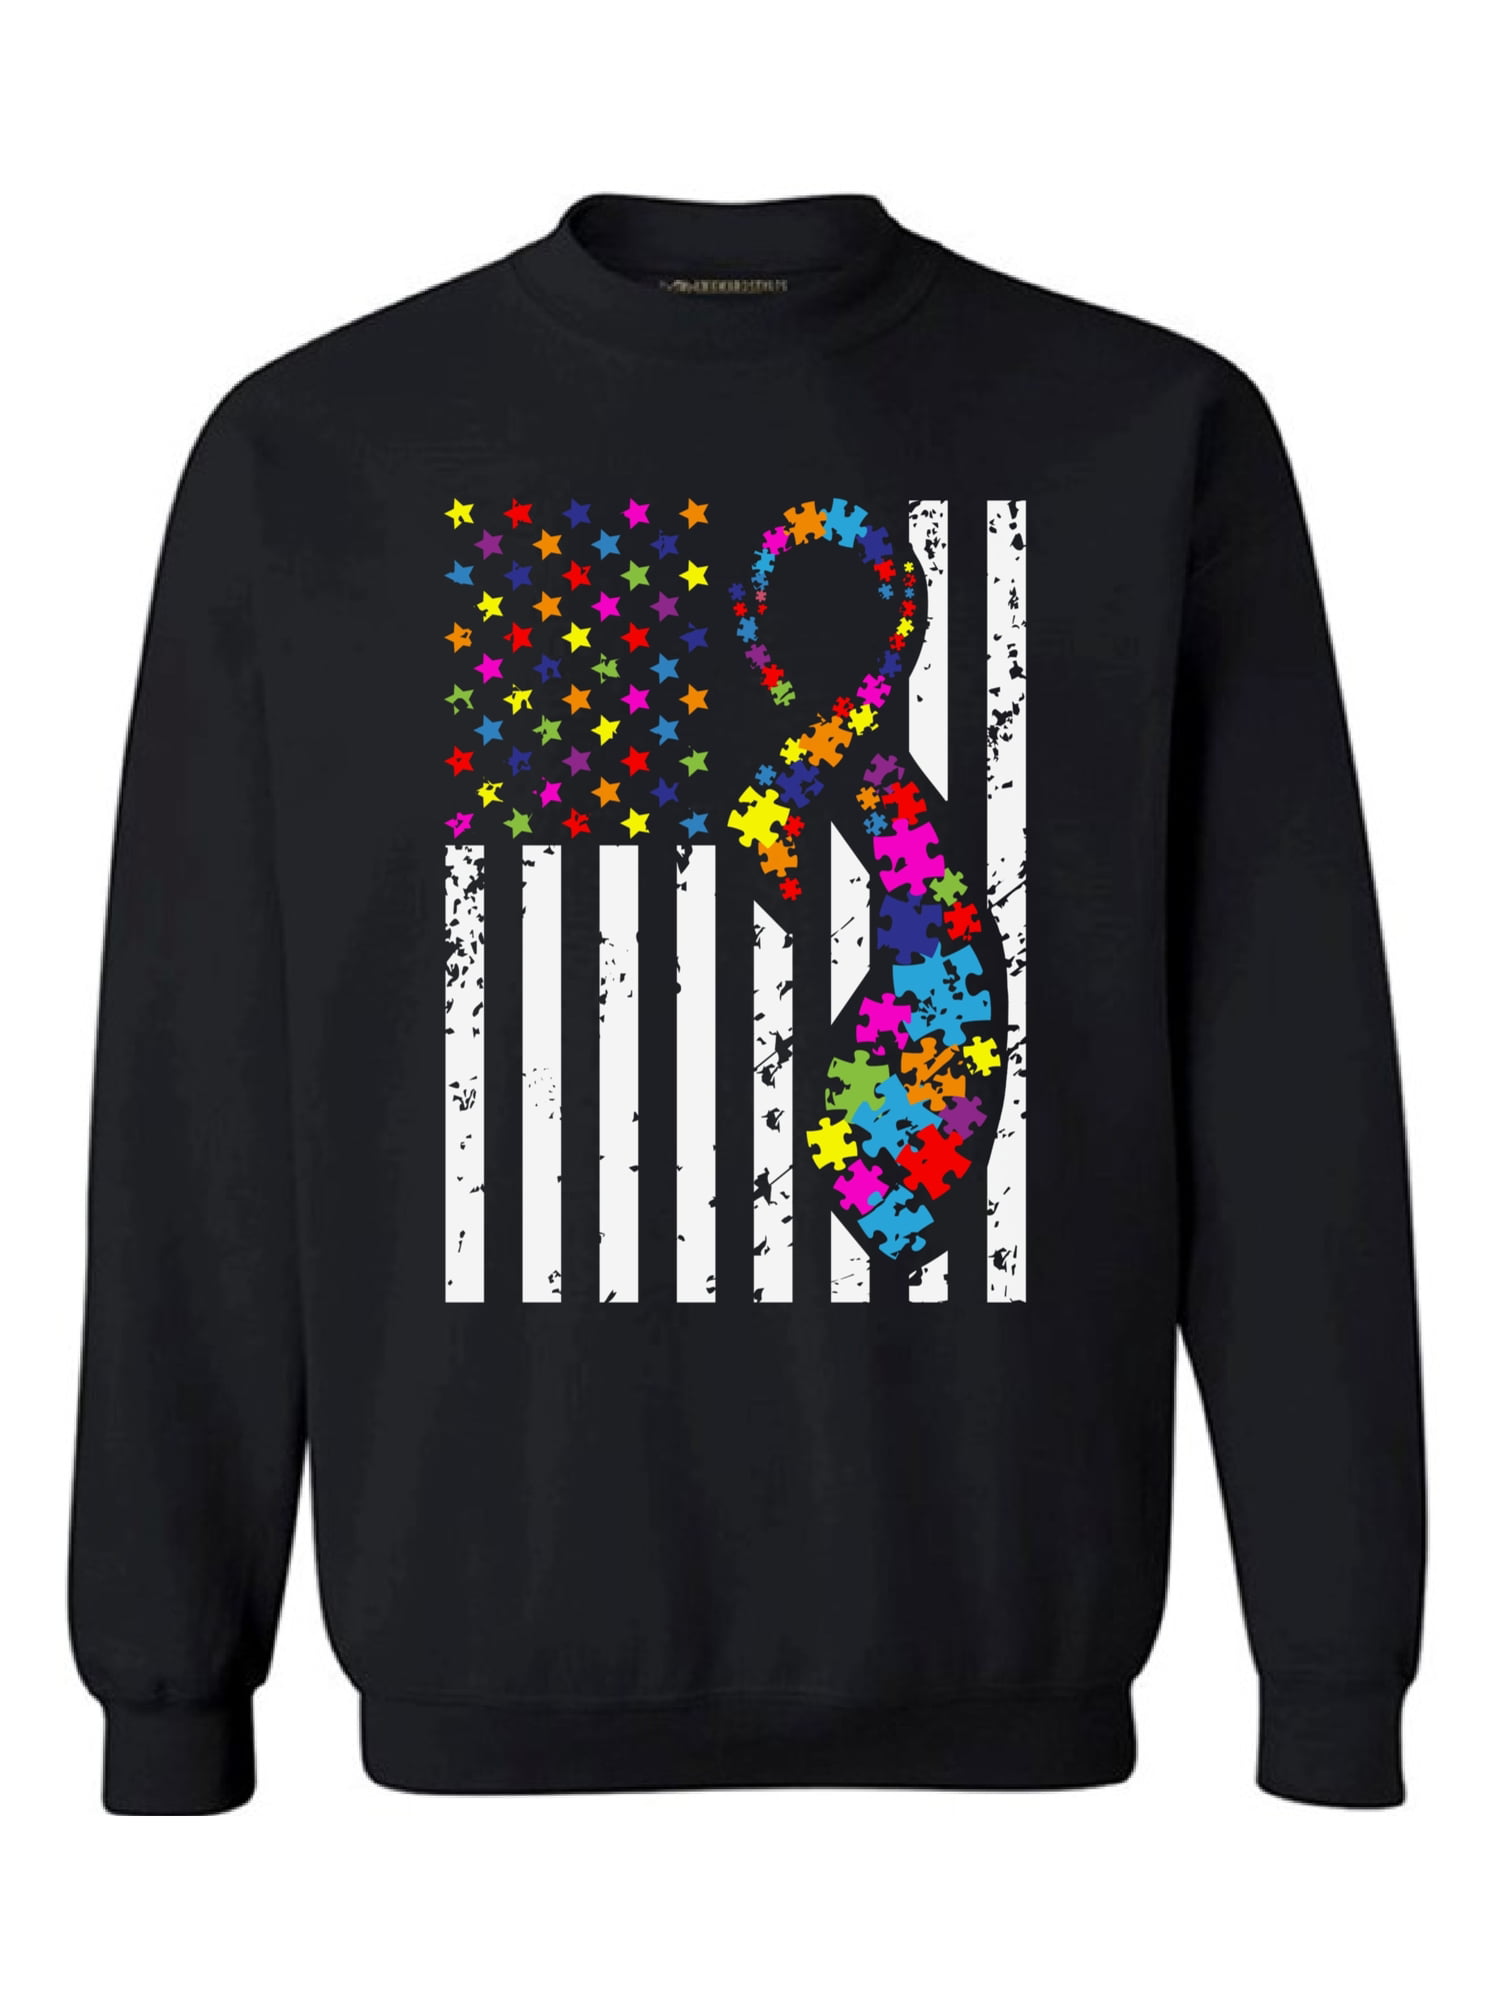 Autism Awareness Puzzle Ribbon USA Flag Hoodies Support Love Sweatshirts